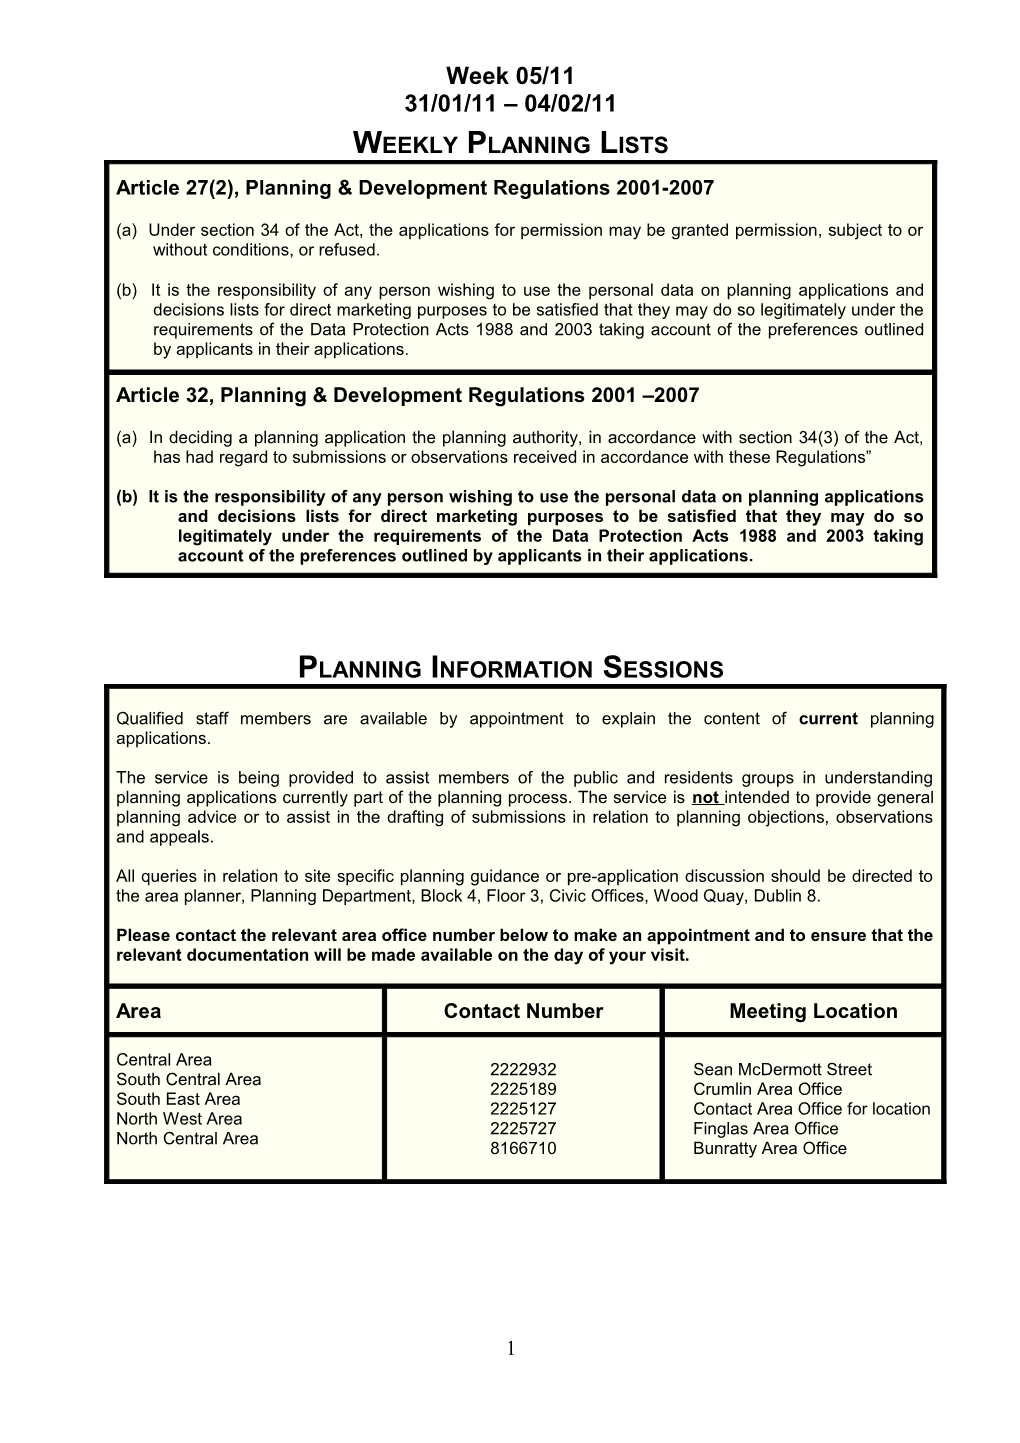 Article 27(2), Planning & Development Regulations 2001-2007 s15